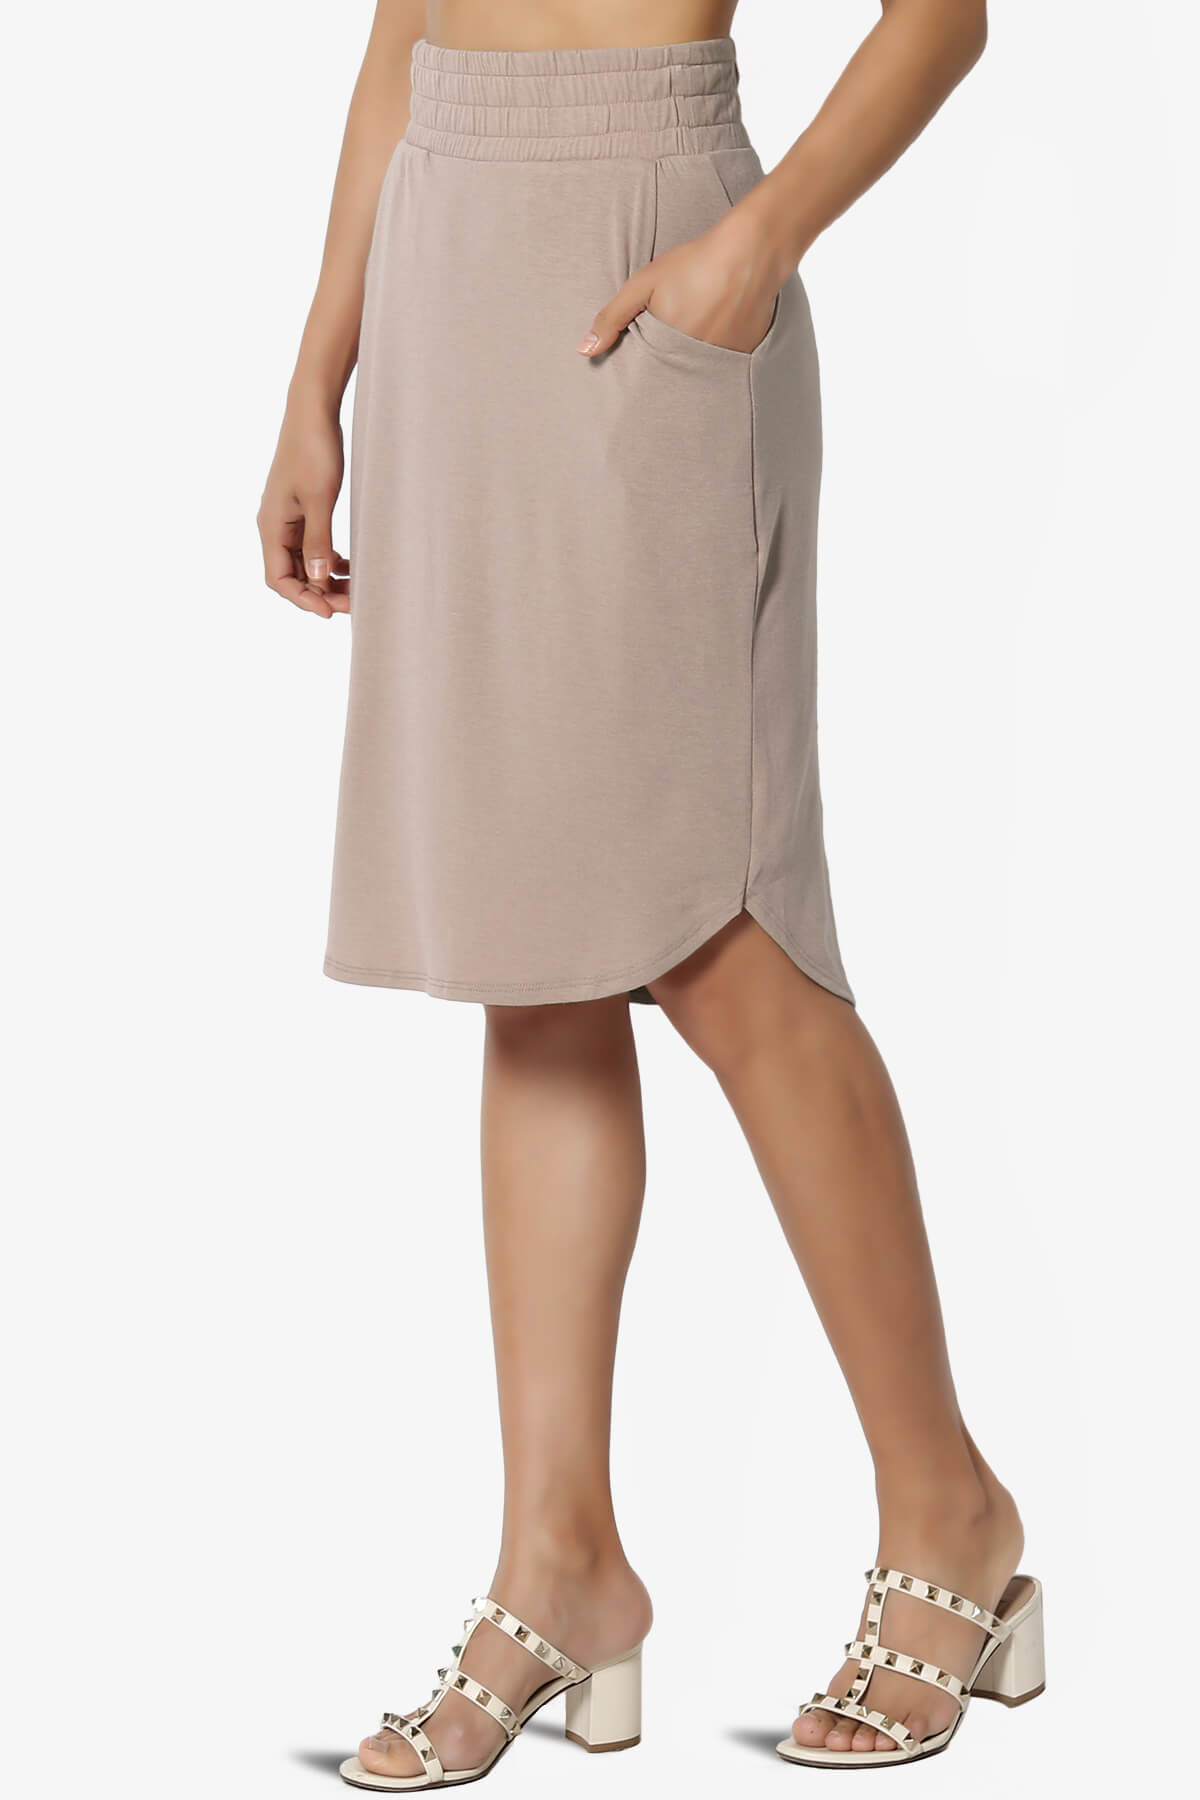 TheMogan Women's Elastic High Waist Soft Midi Skirt w Pocket Comfortable Casual Everyday Wear